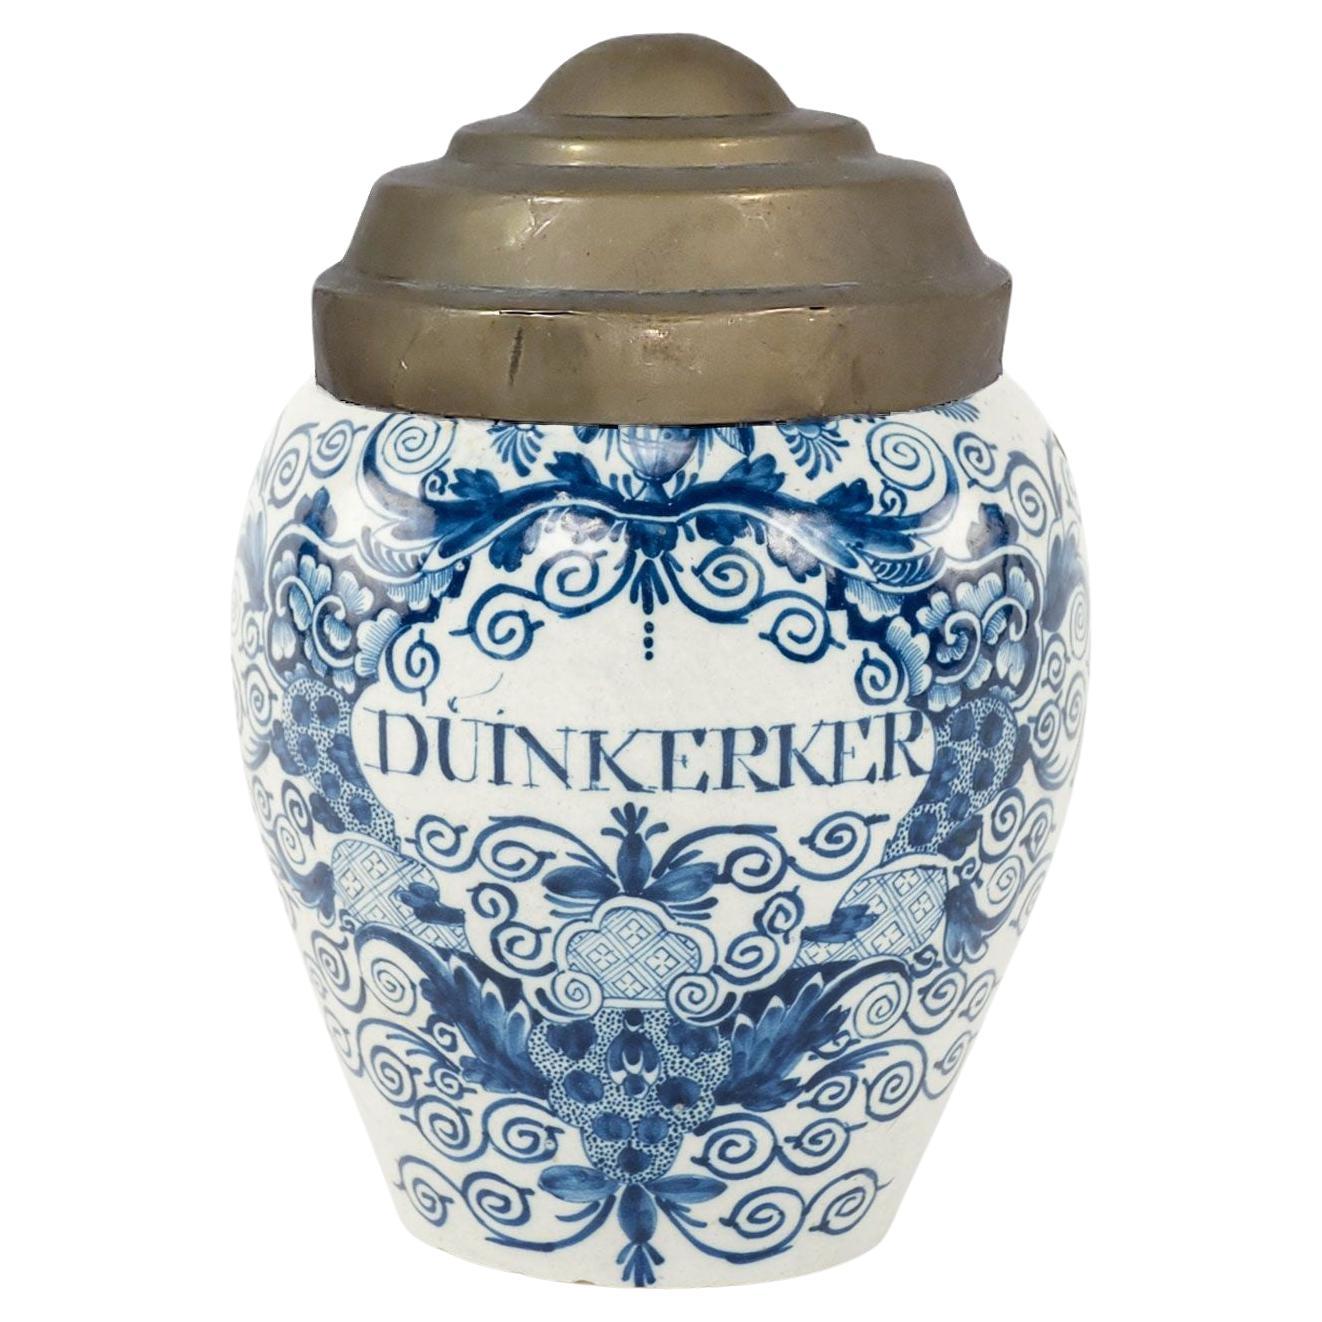 Delft Blue and White "Dunkerer" Tobacco Jar